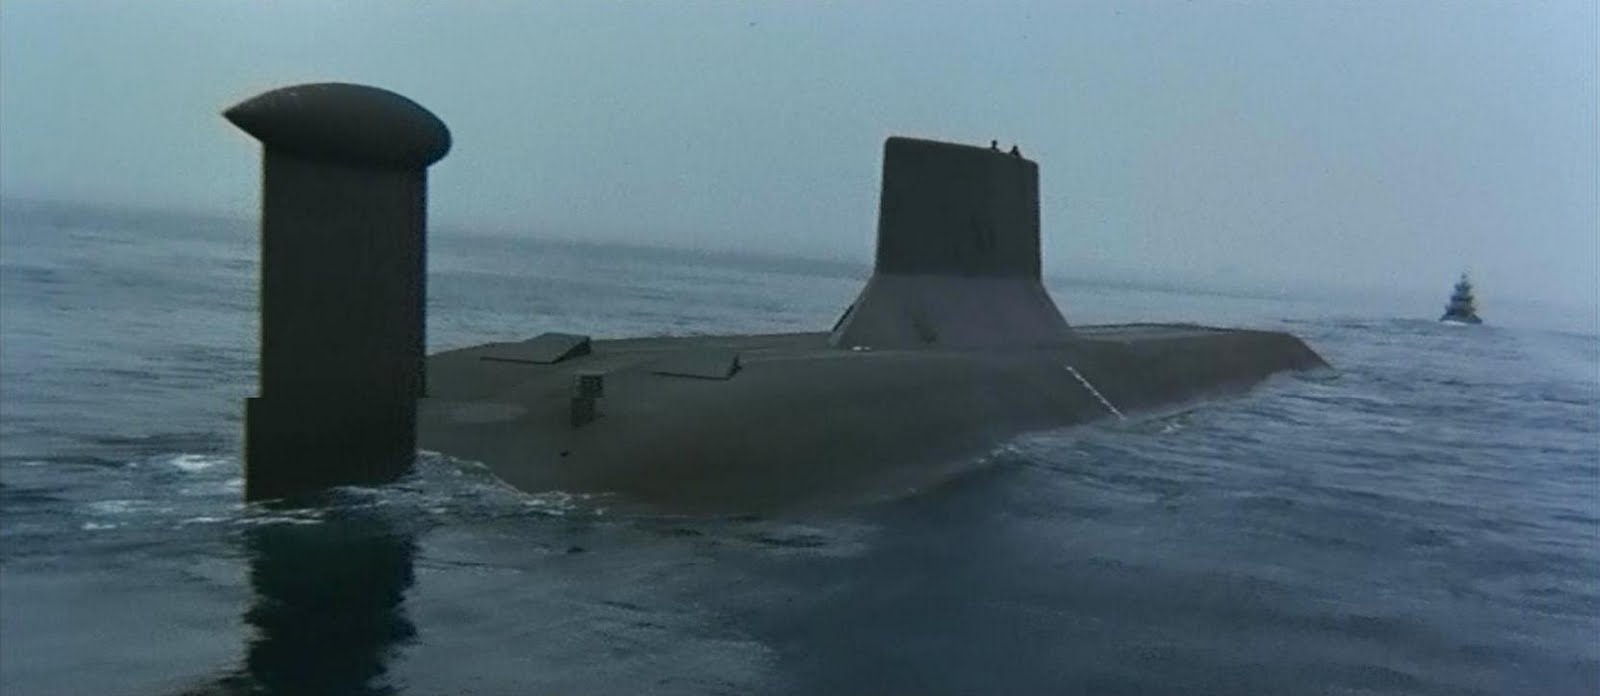 China’s new submarine engine is poised to revolutionize underwater warfare